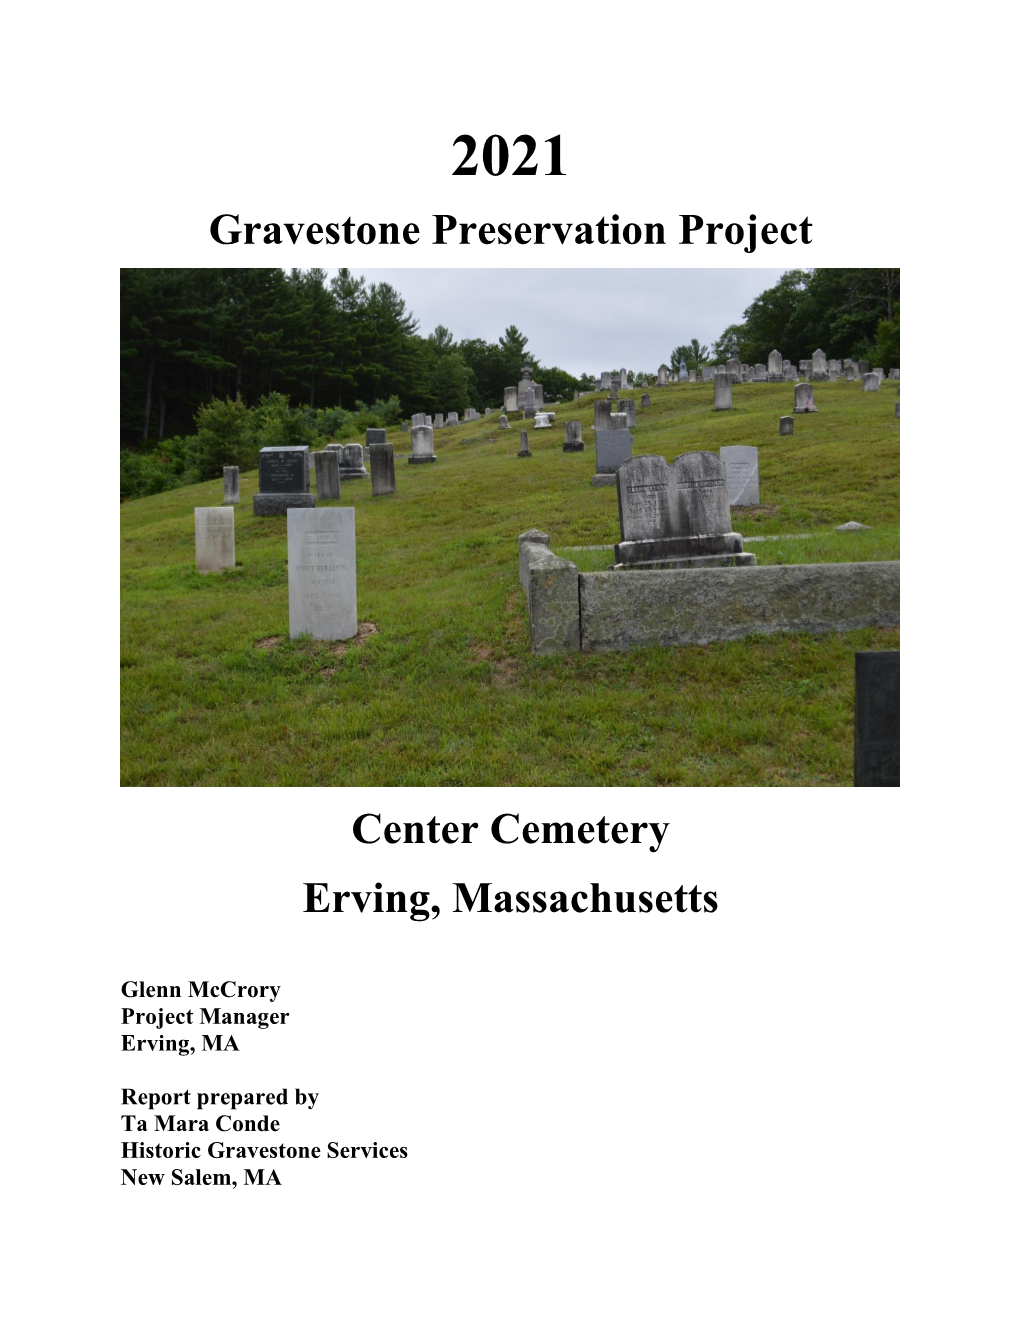 Gravestone Preservation Project Center Cemetery